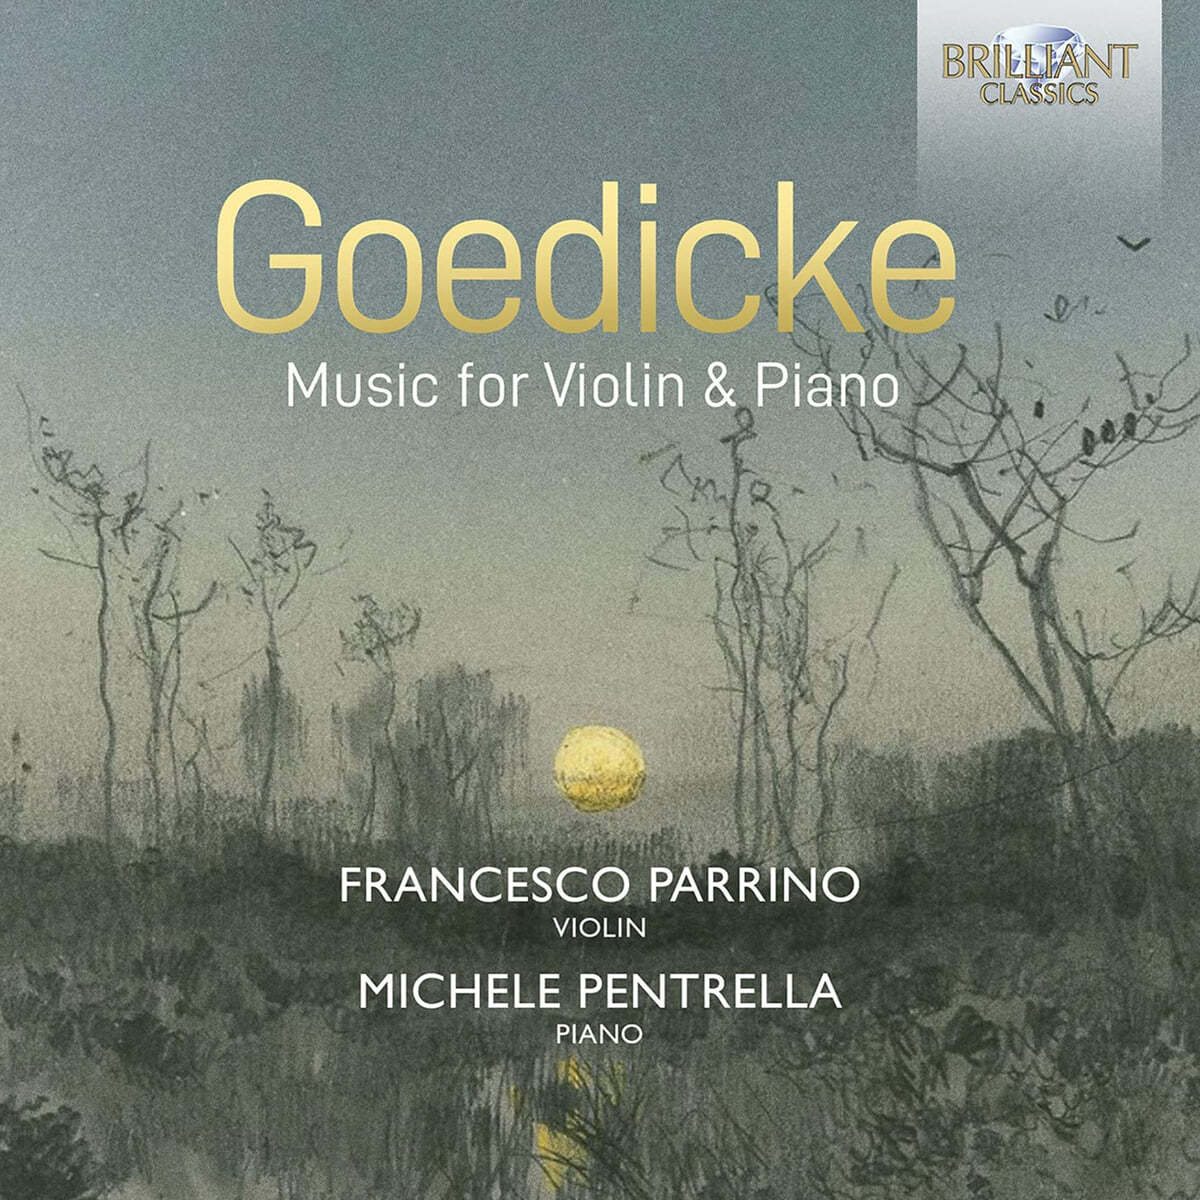 Francesco Parrino 알렉산더 표도로비치 괴딕: 바이올린 소나타, 10개의 소품 (Alexander Fyodorovich Goedicke: Violin Sonatas, 10 Pieces) 